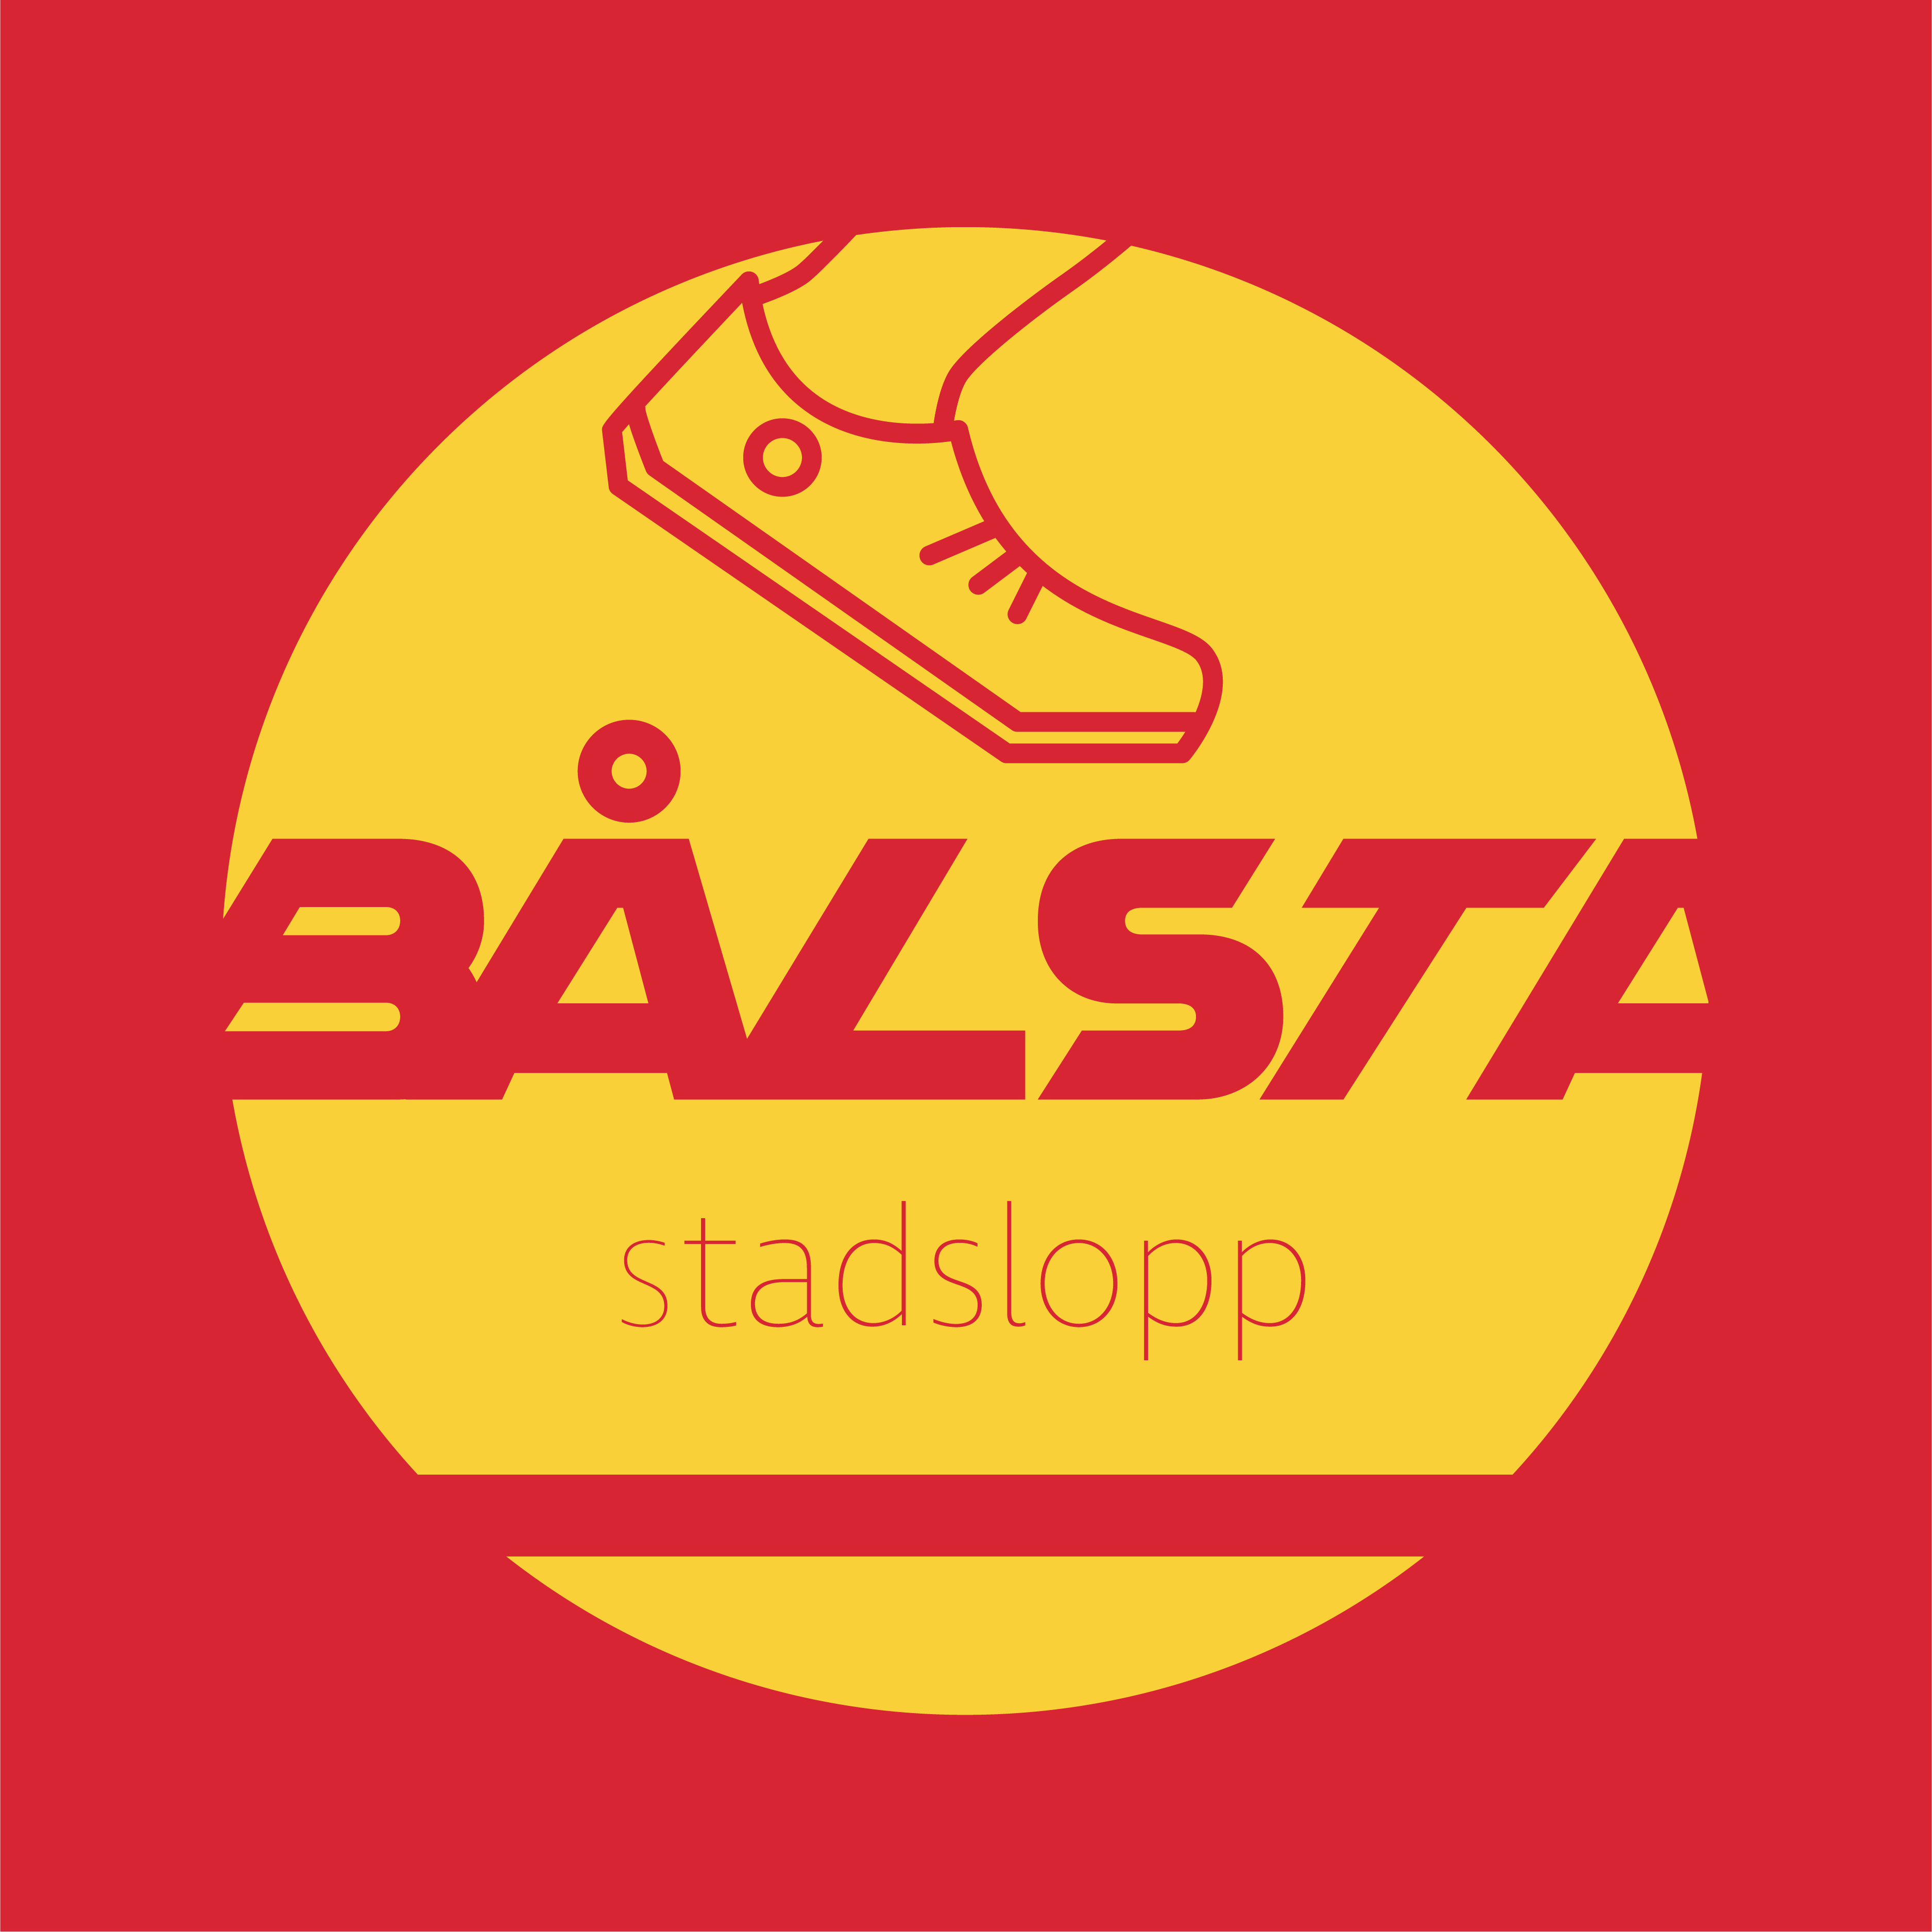 Ba_lsta Stadslopp Logo RGB Ro_d BG